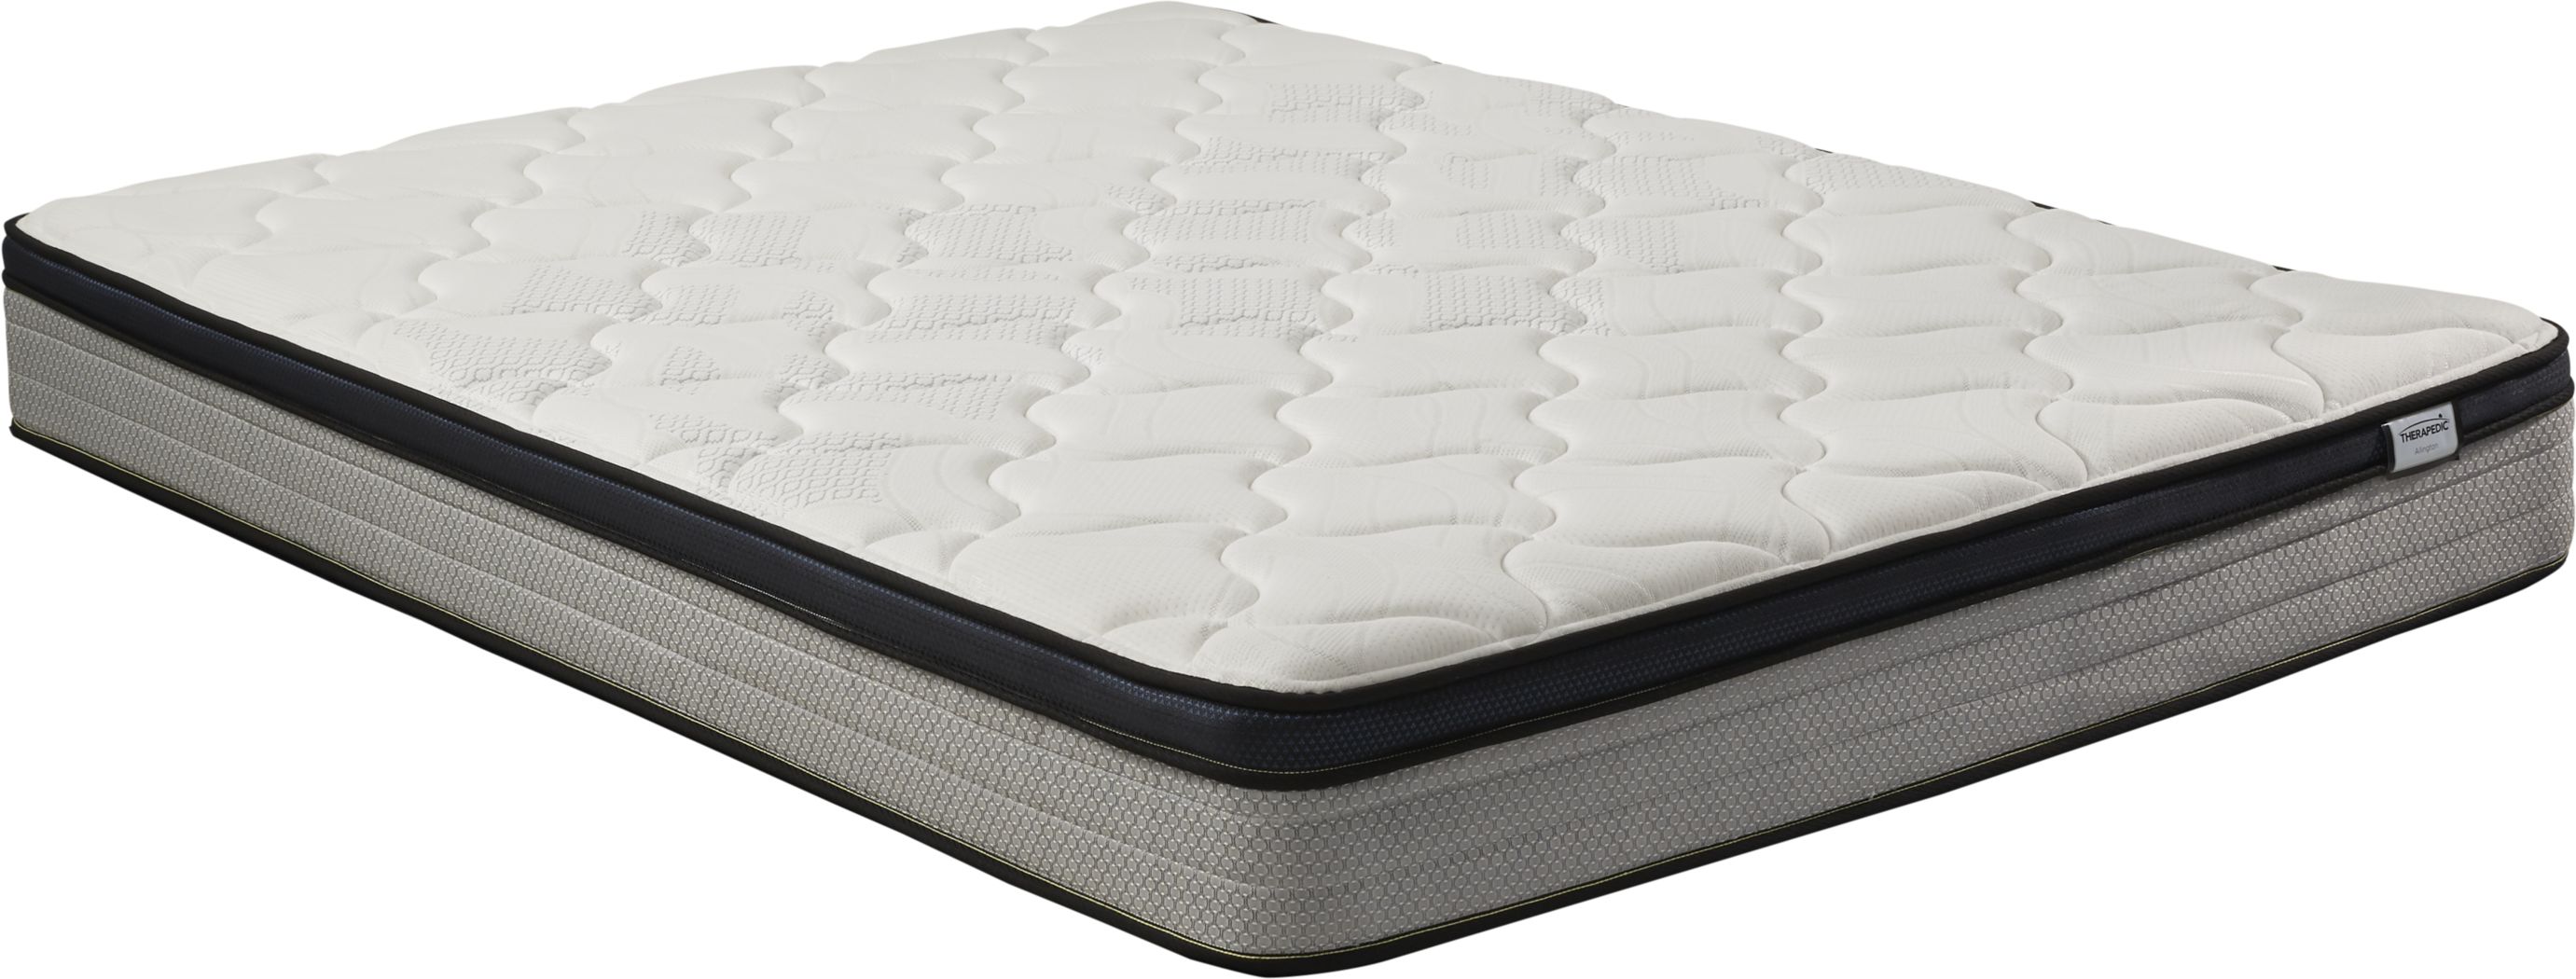 therapedic allington mattress review